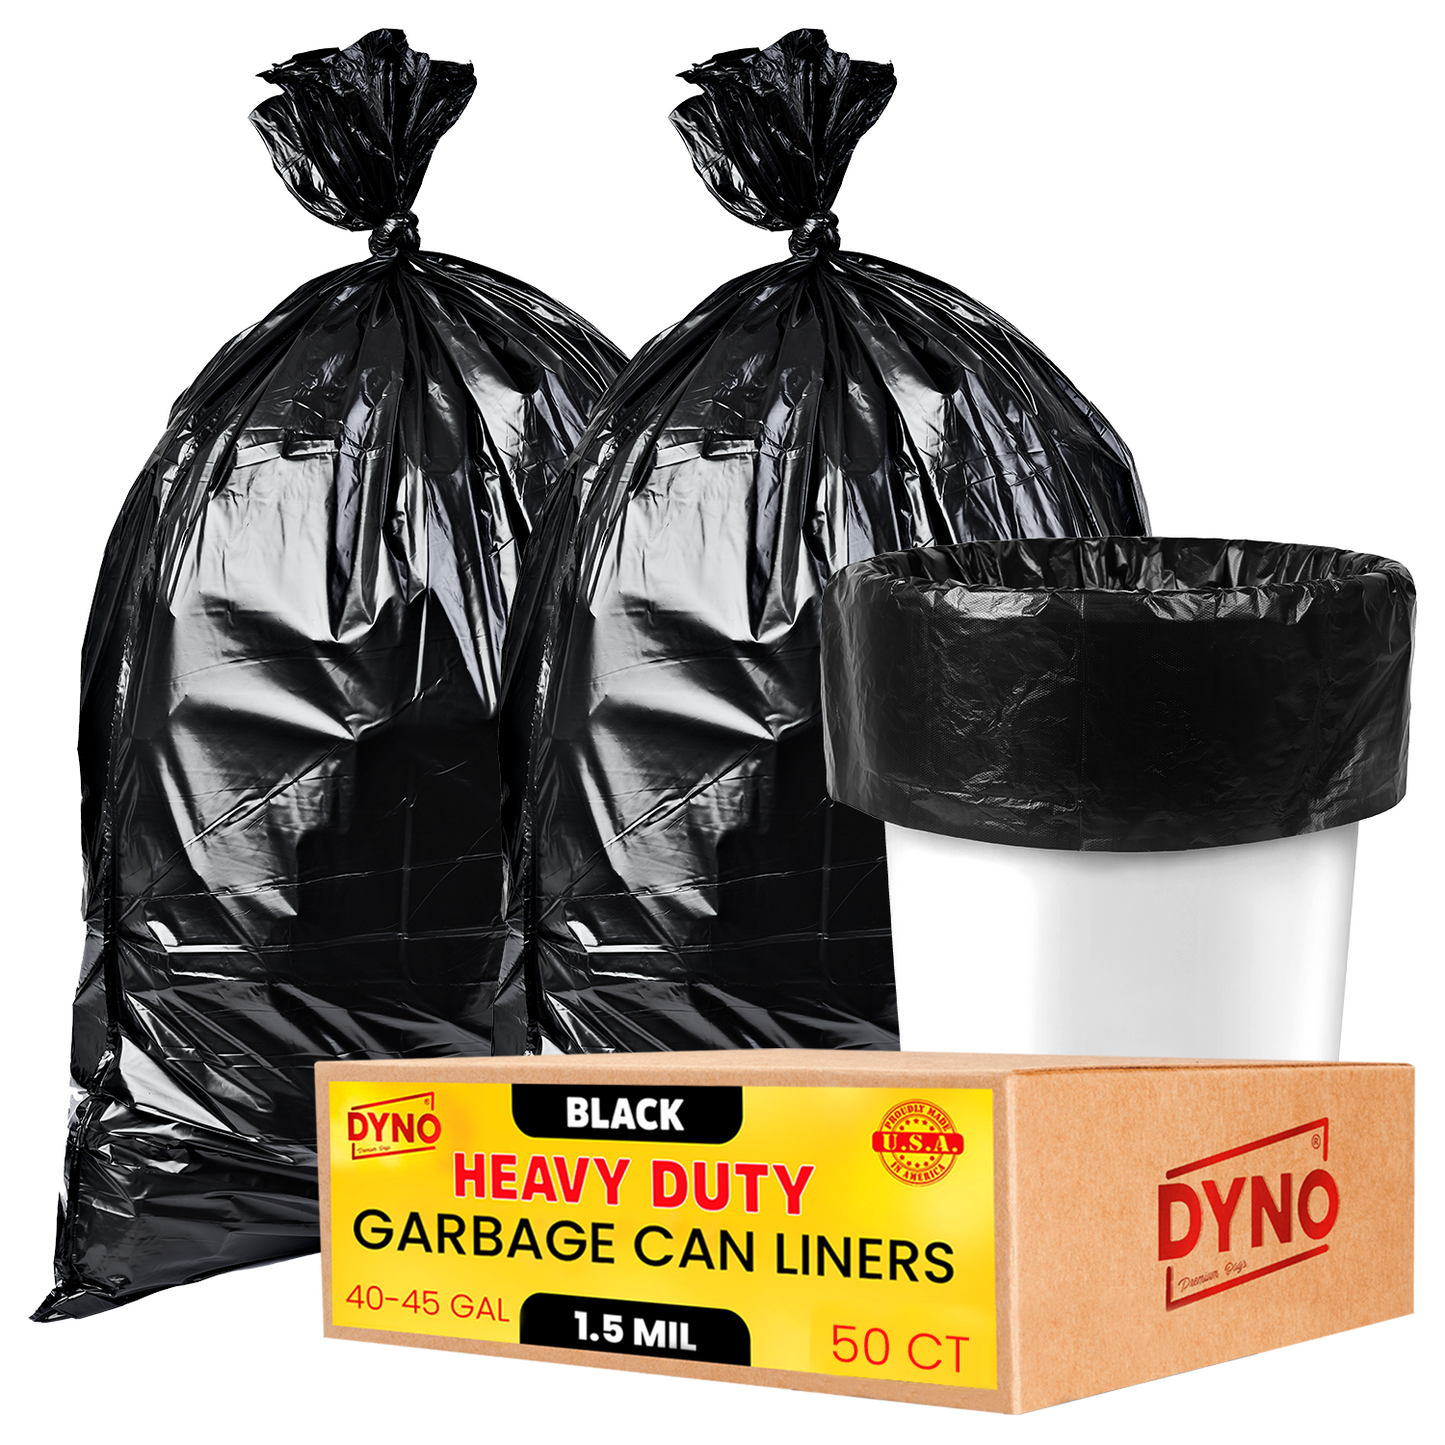 Handi-Bag Extra Large 33 Gallon Trash Bags, Black, Low-Density, 0.70 mil,  32 x 40, 240/Carton